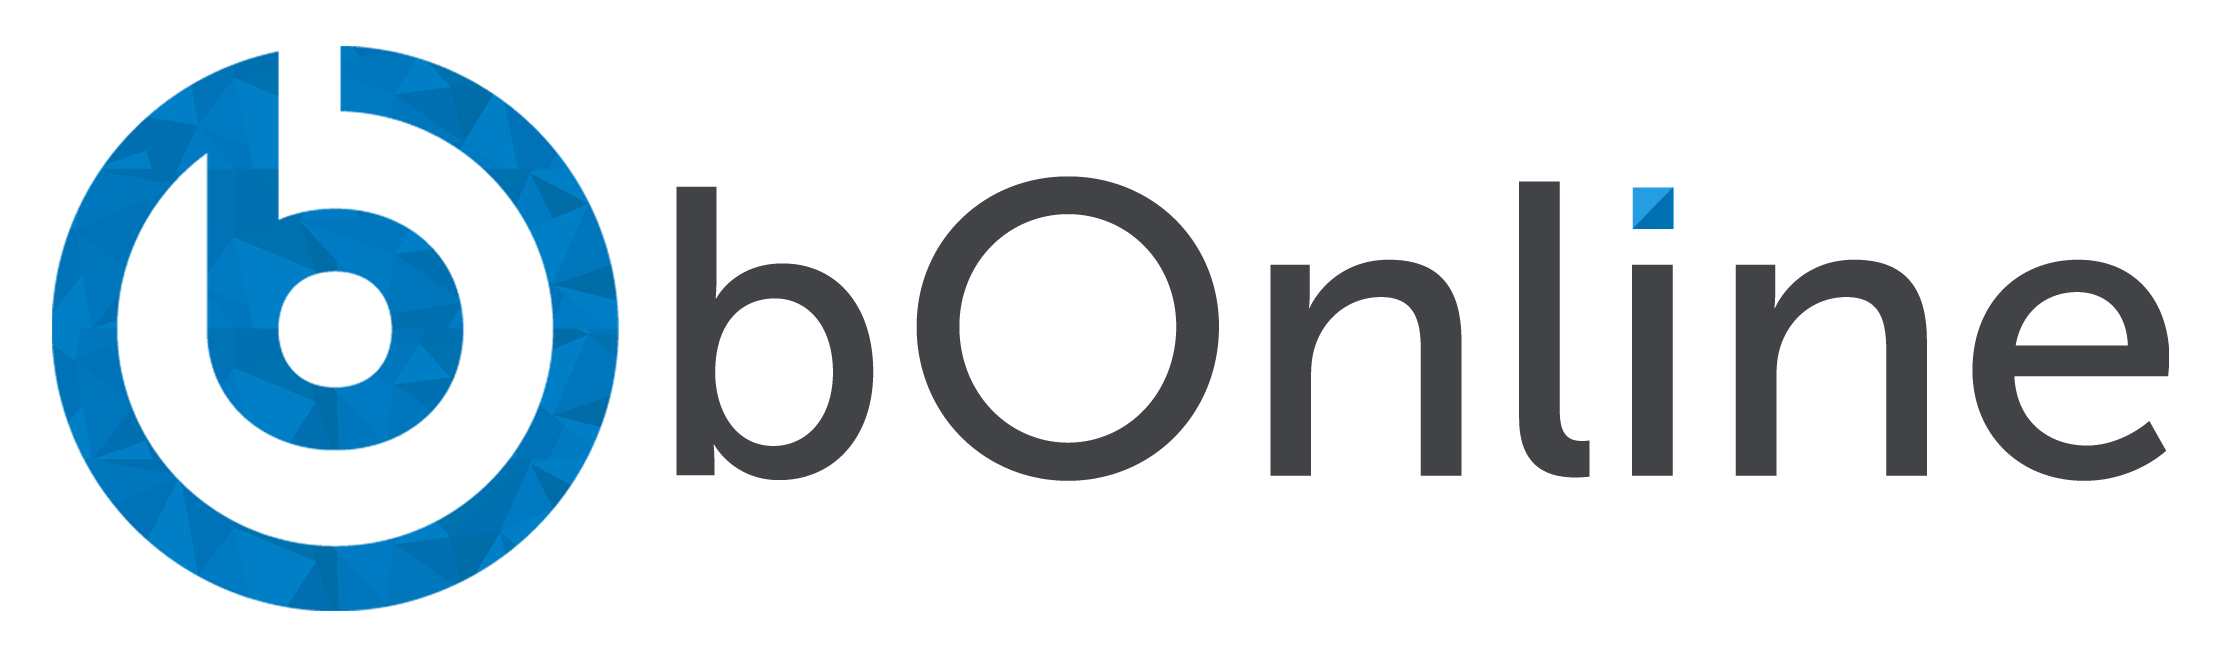 bOnline logo  B2B Client